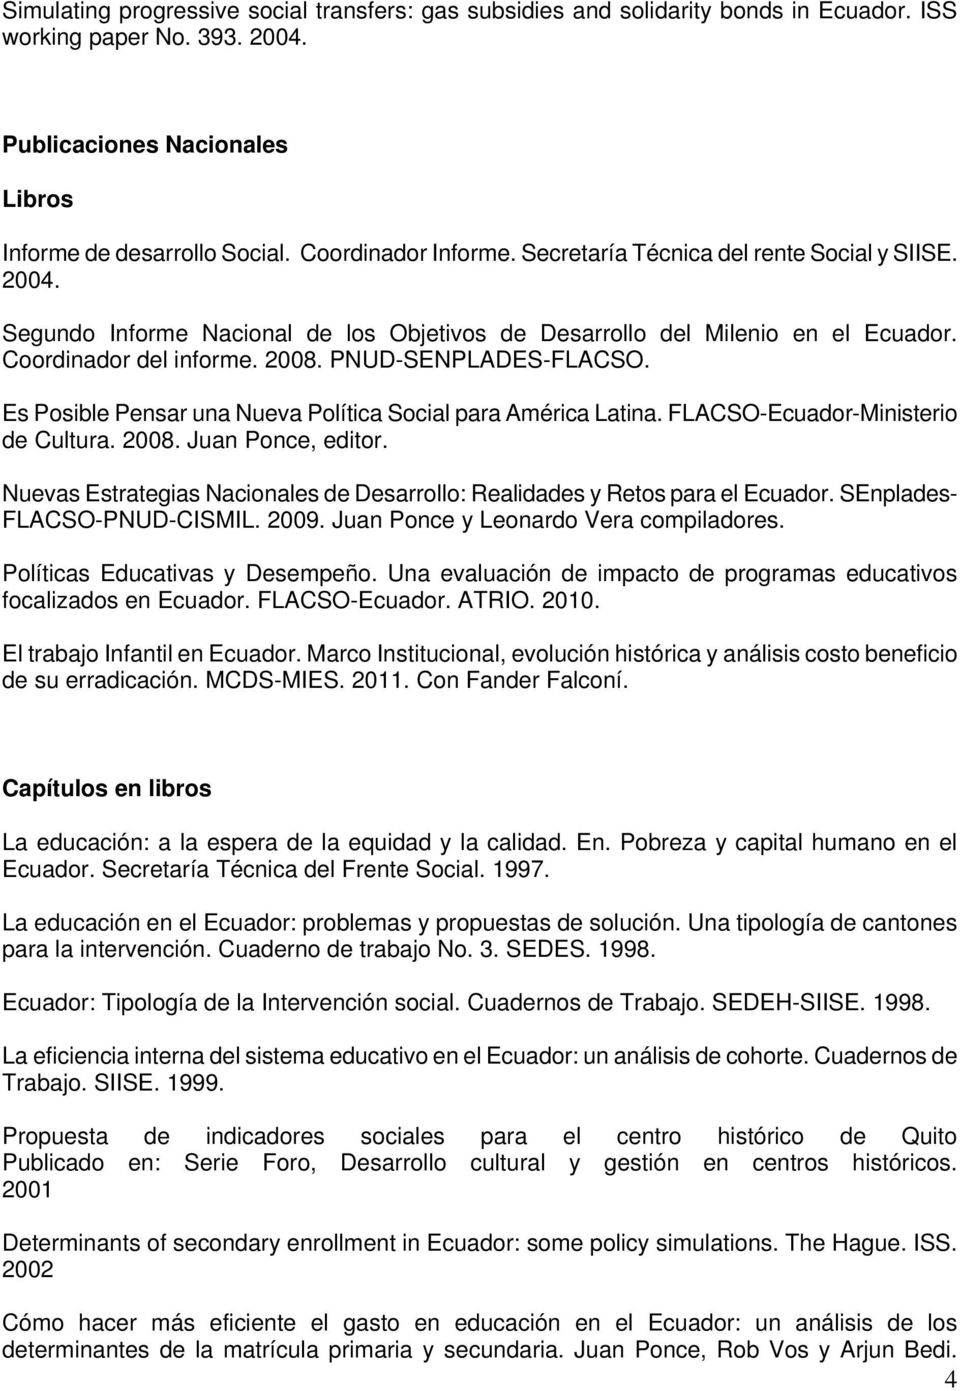 PNUD-SENPLADES-FLACSO. Es Posible Pensar una Nueva Política Social para América Latina. FLACSO-Ecuador-Ministerio de Cultura. 2008. Juan Ponce, editor.